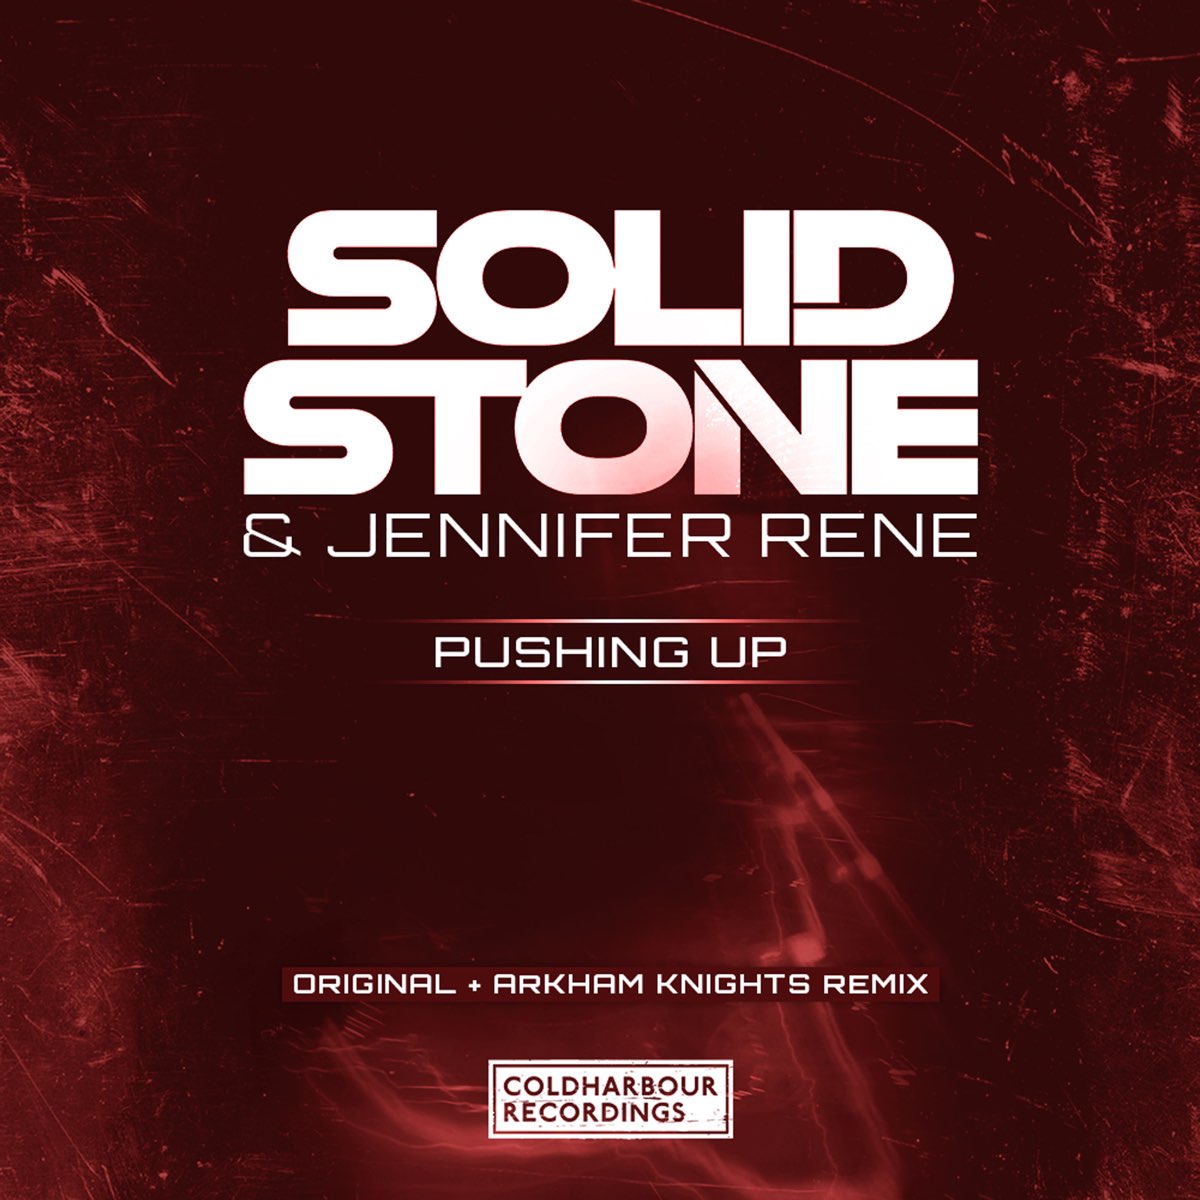 Jennifer Rene. Coldharbour recordings – clhr009. Call of the Heart. Diversion Elias Erium | Solid Stone.